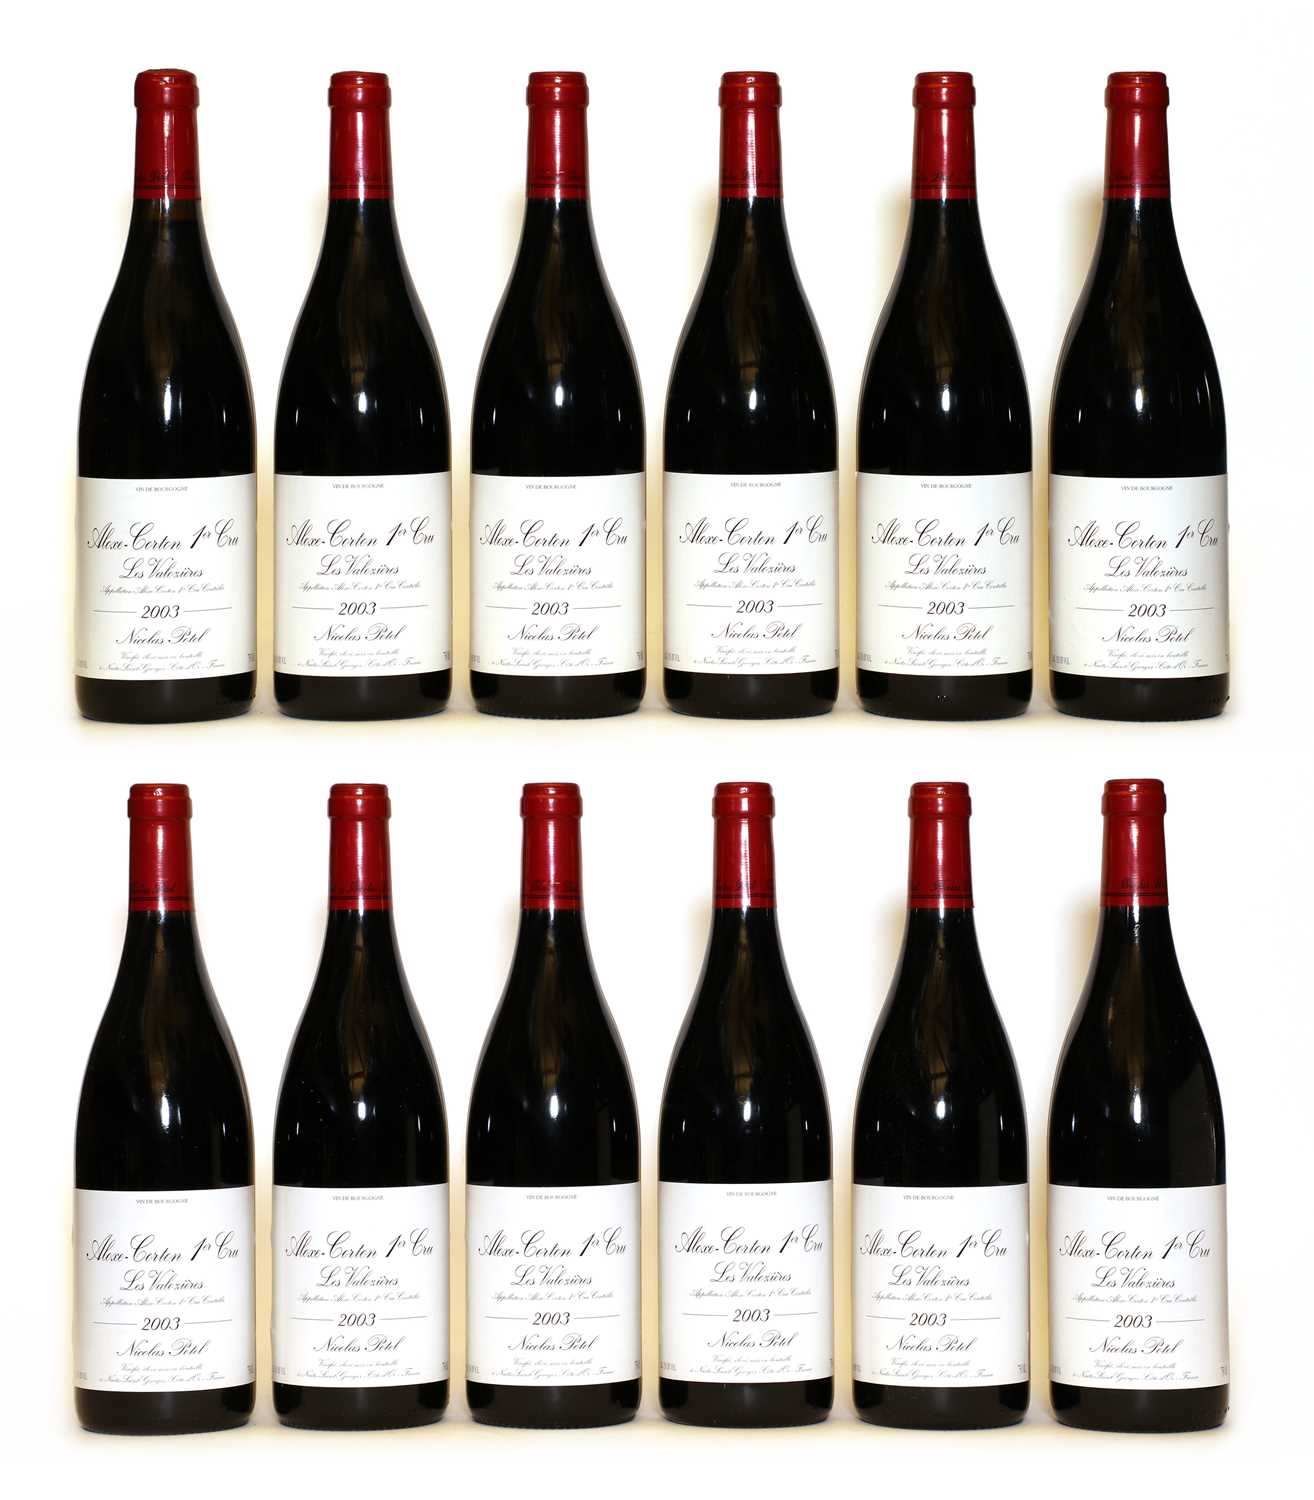 Lot 51 - Aloxe-Corton, 1er Cru, Les Valozieres, Nicolas Potel, 2003, twelve bottles (boxed)